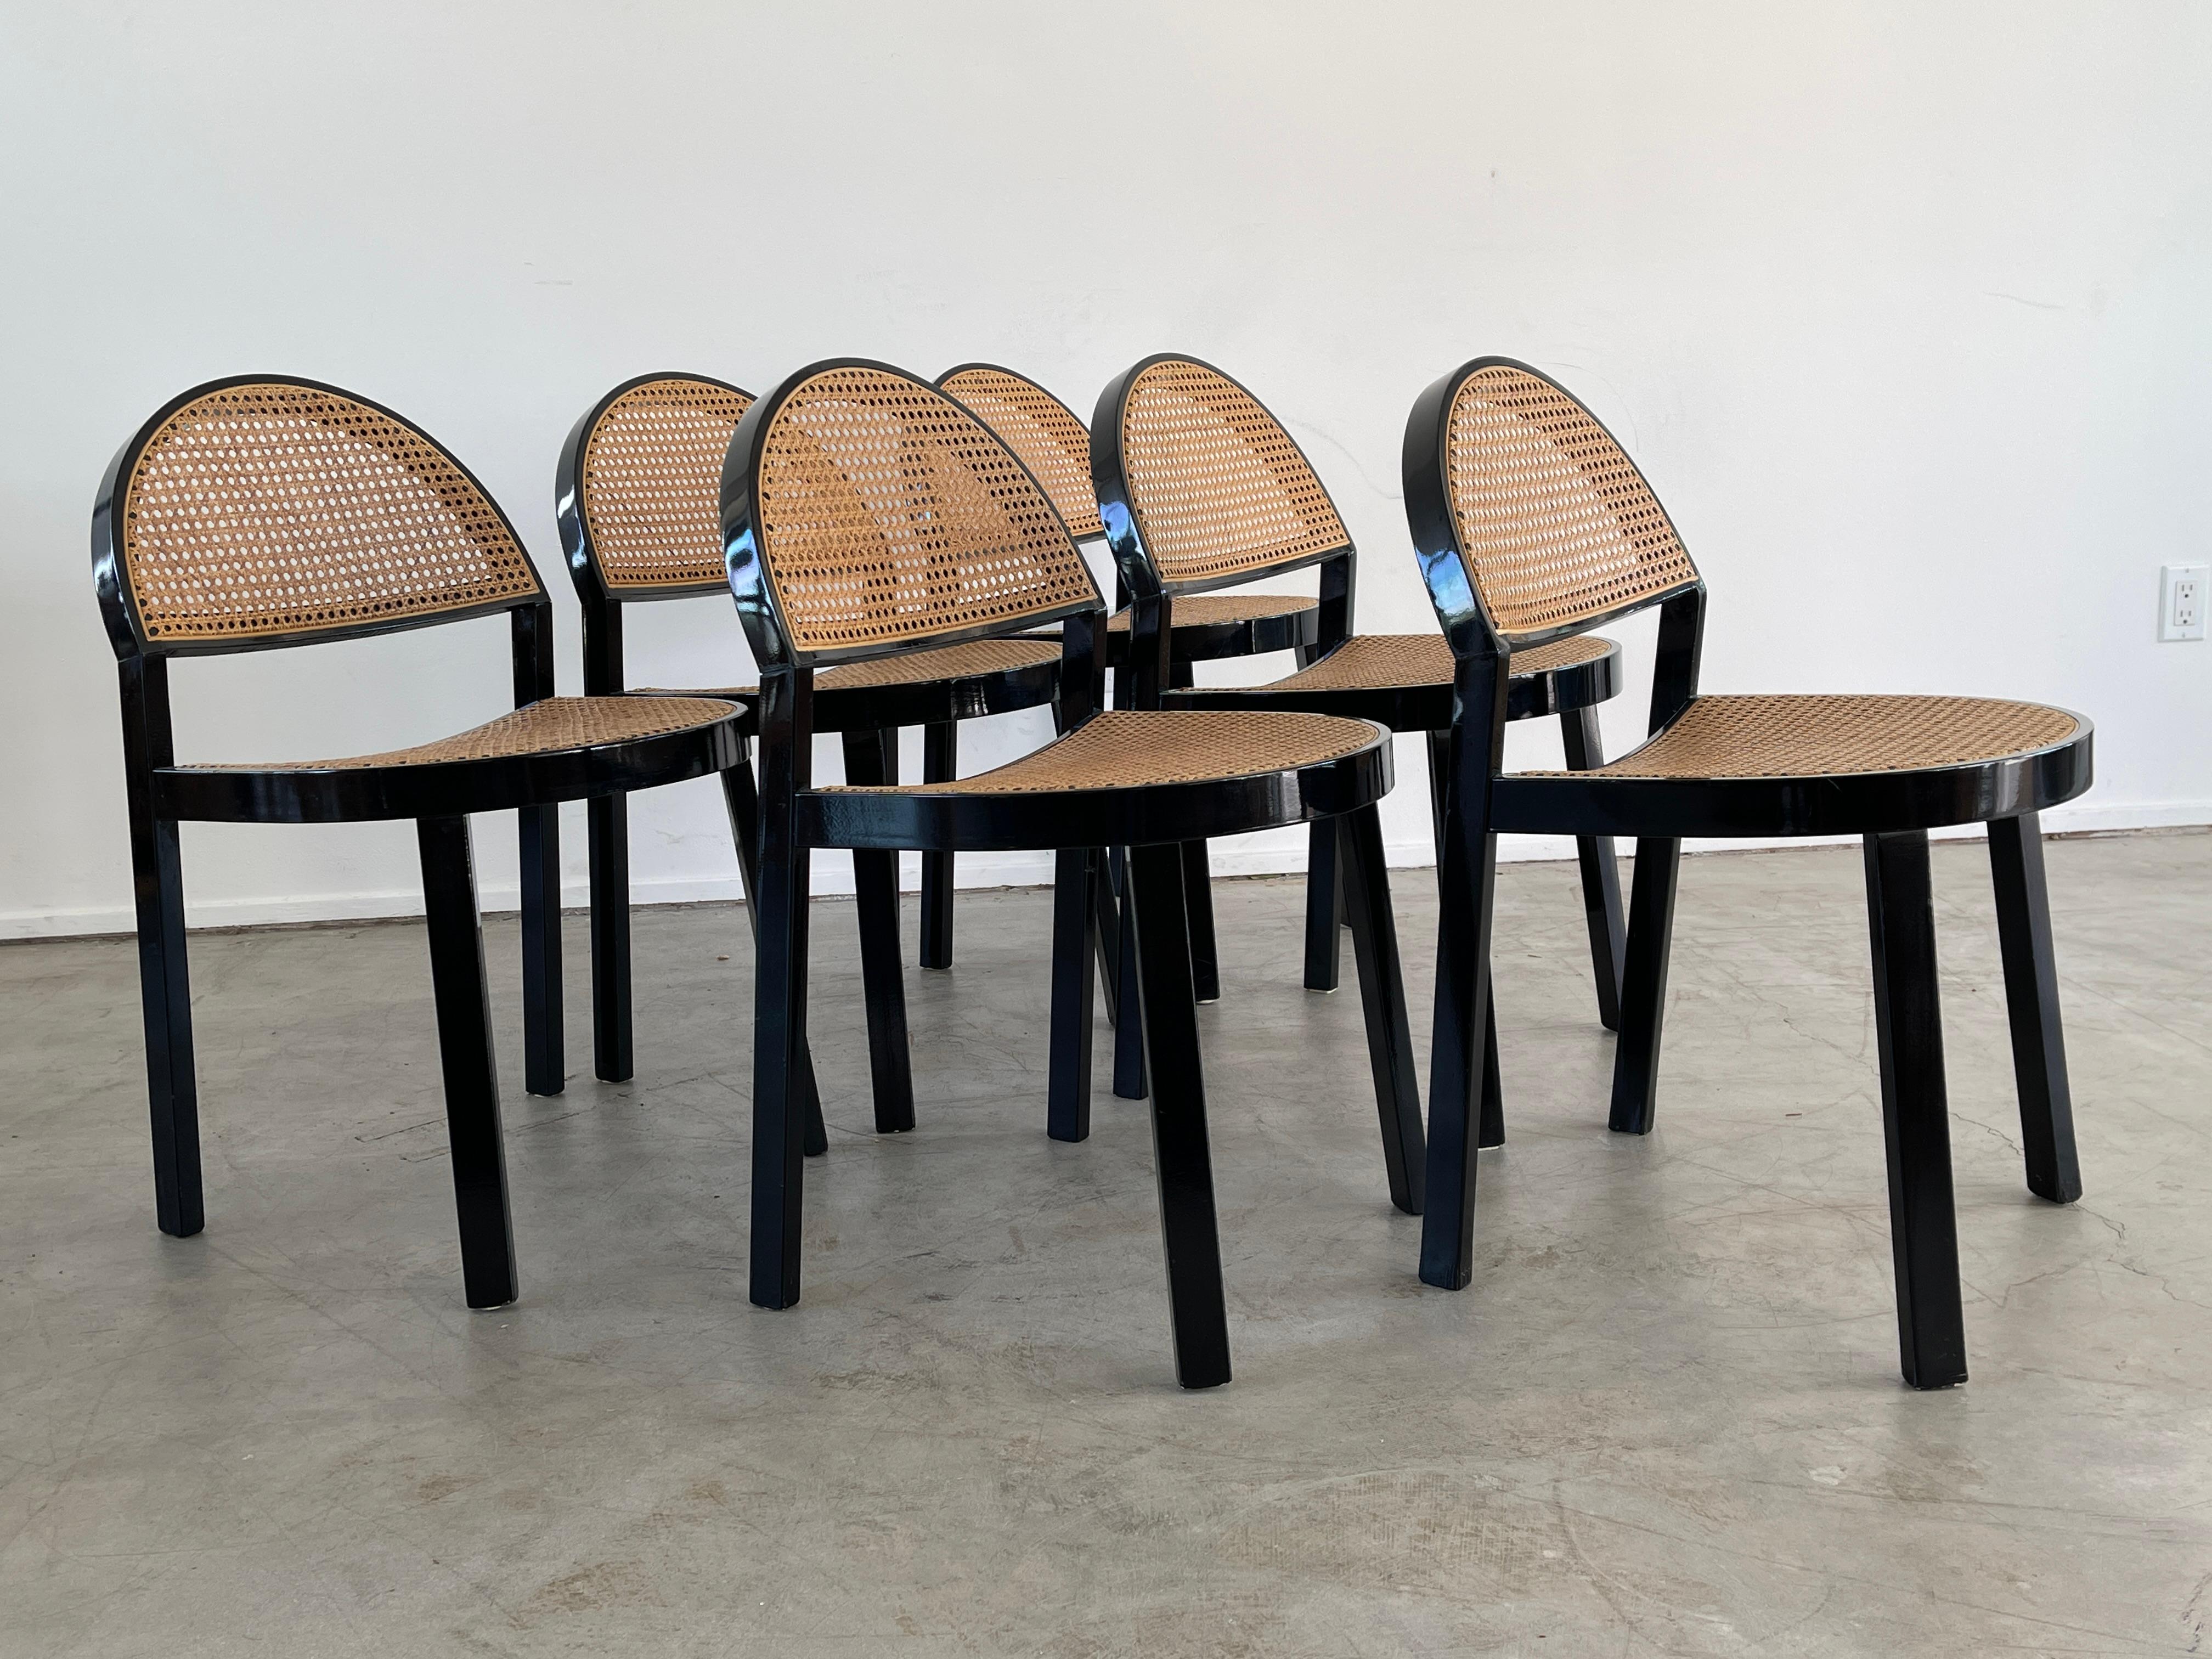 Elegant set of six Italian chairs by designers Jonathan de Pas & Donato D'urbino. Newly refinished ebony finish with original Italian caned seats and backs. Sold as a set.